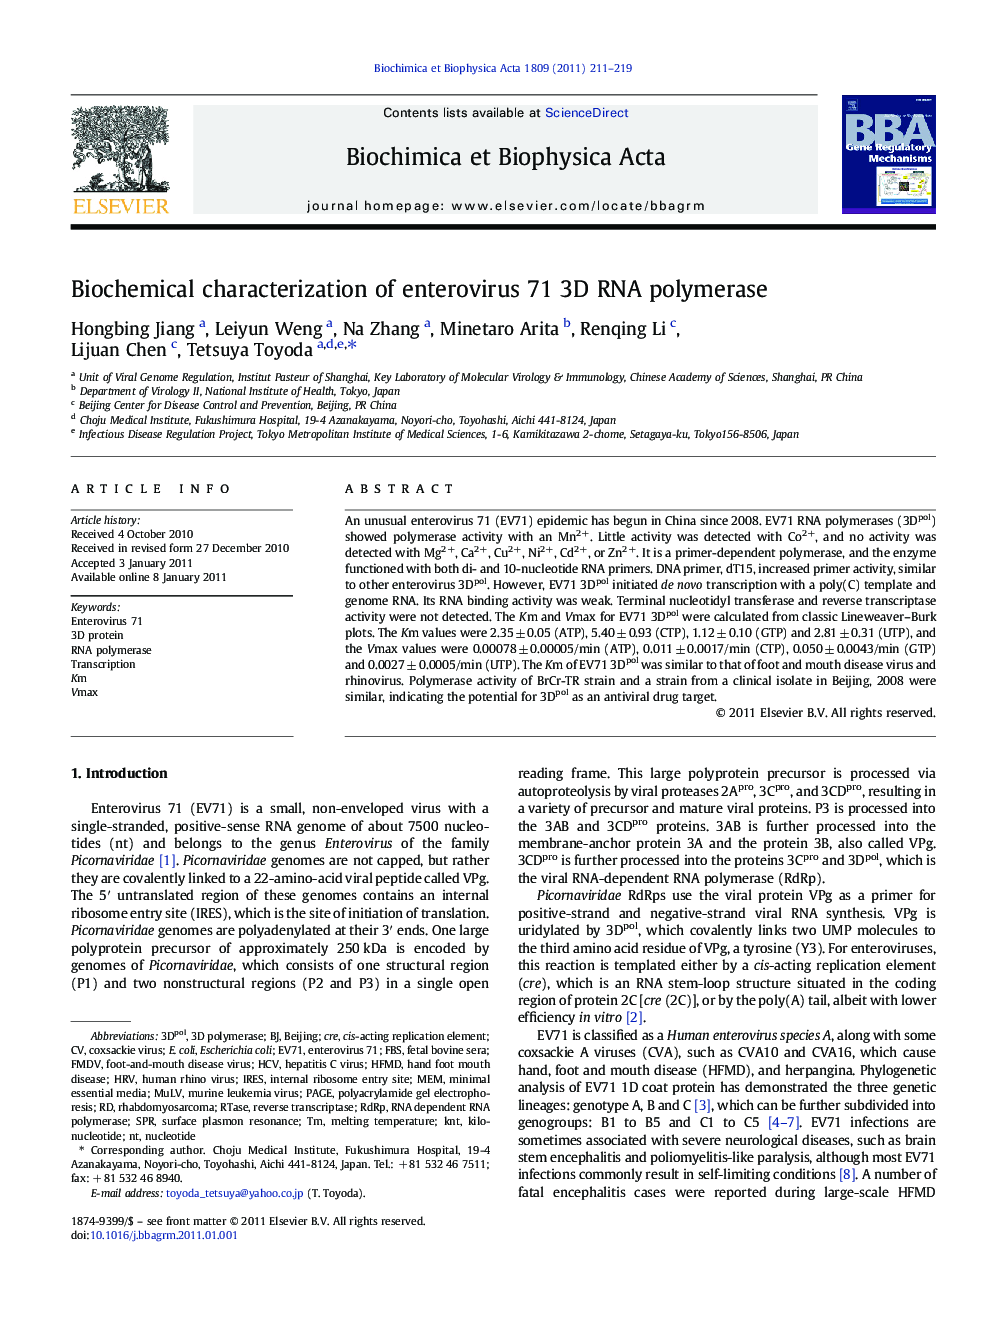 Biochemical characterization of enterovirus 71 3D RNA polymerase